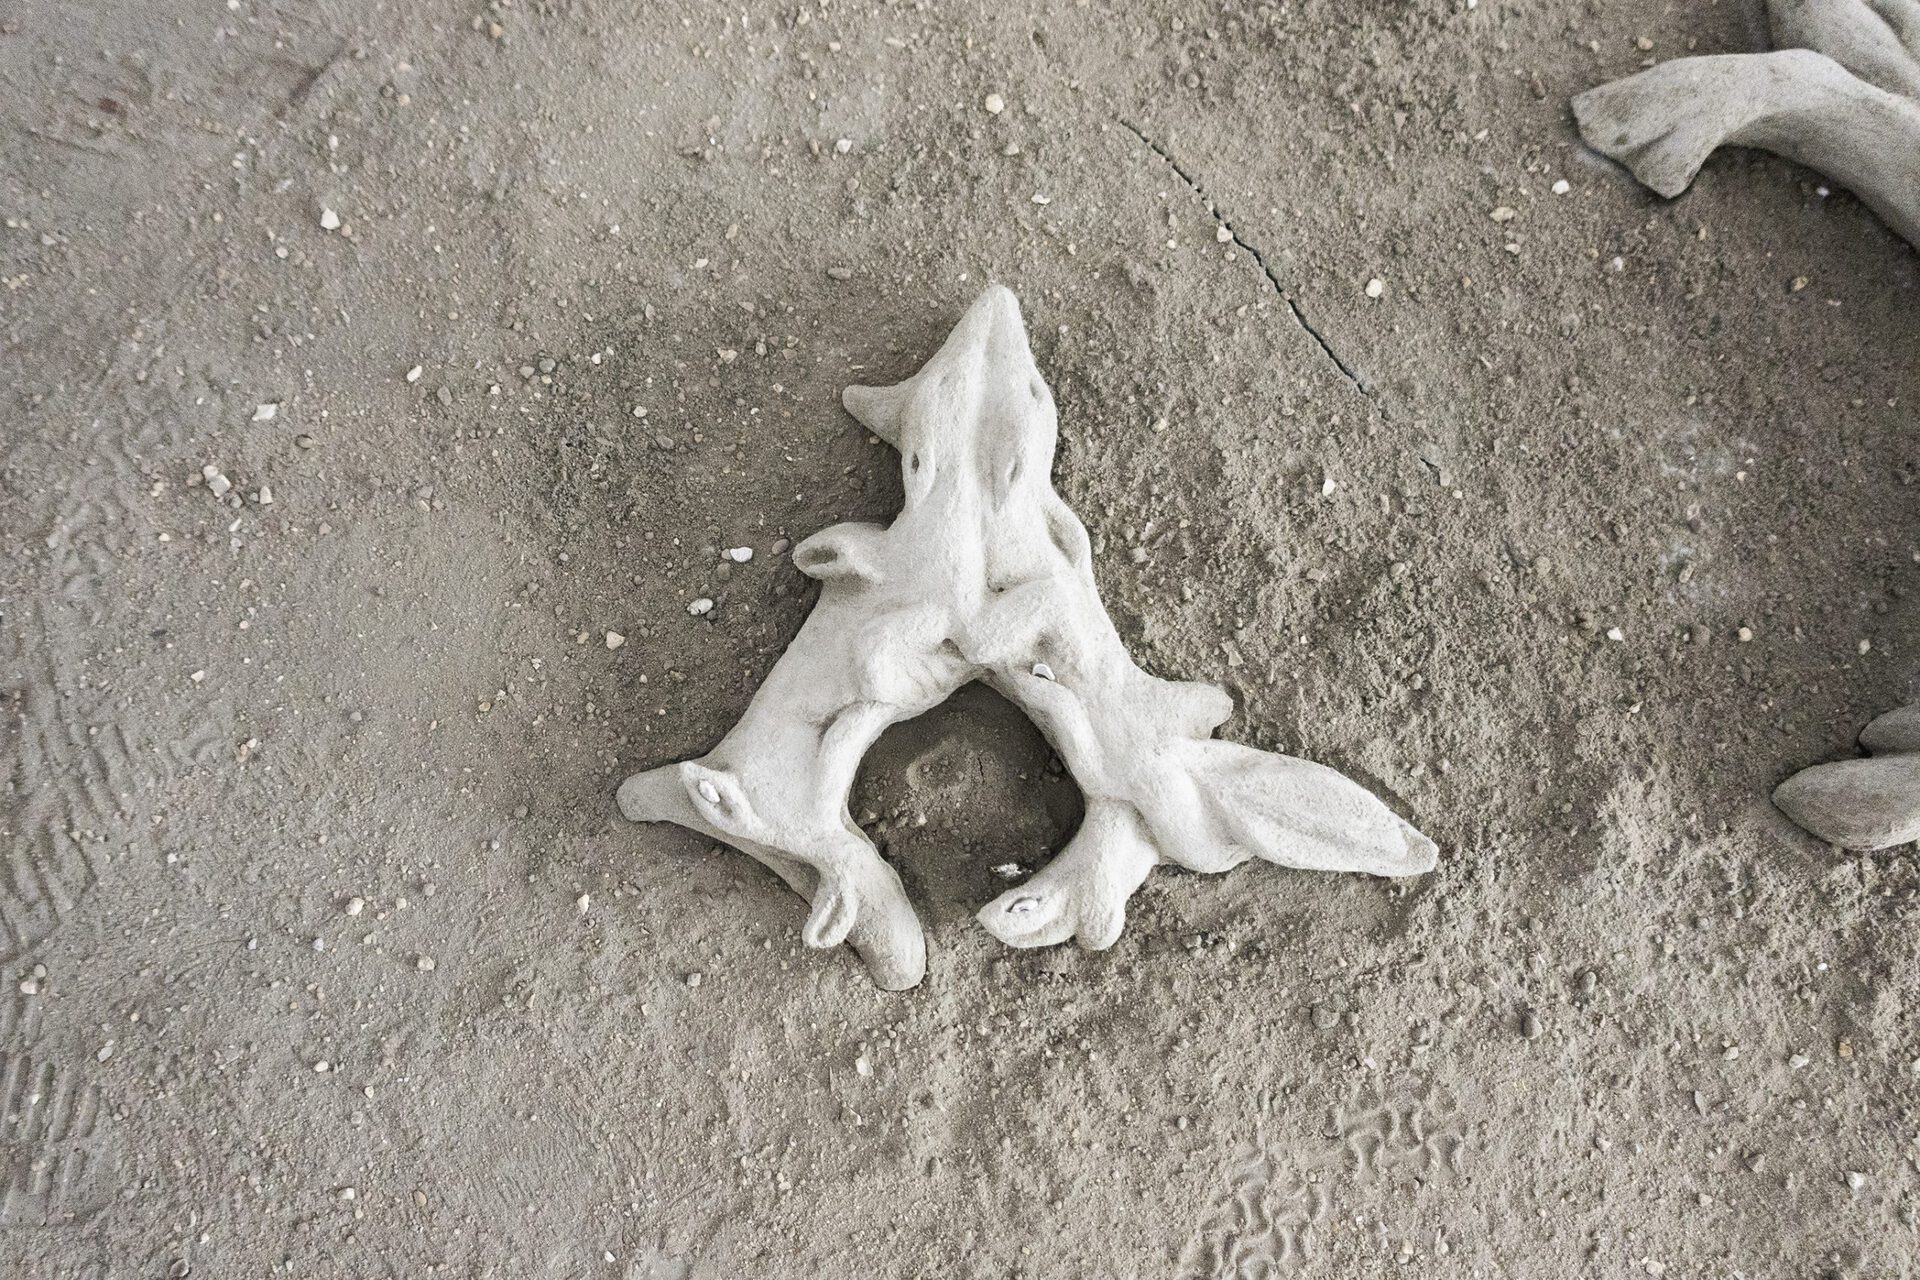 Canine Anastomose, 2021, concrete, 17 x 24 x 4 cm, Xolo Cuintle (Romy Texier and Valentin Vie Binet)